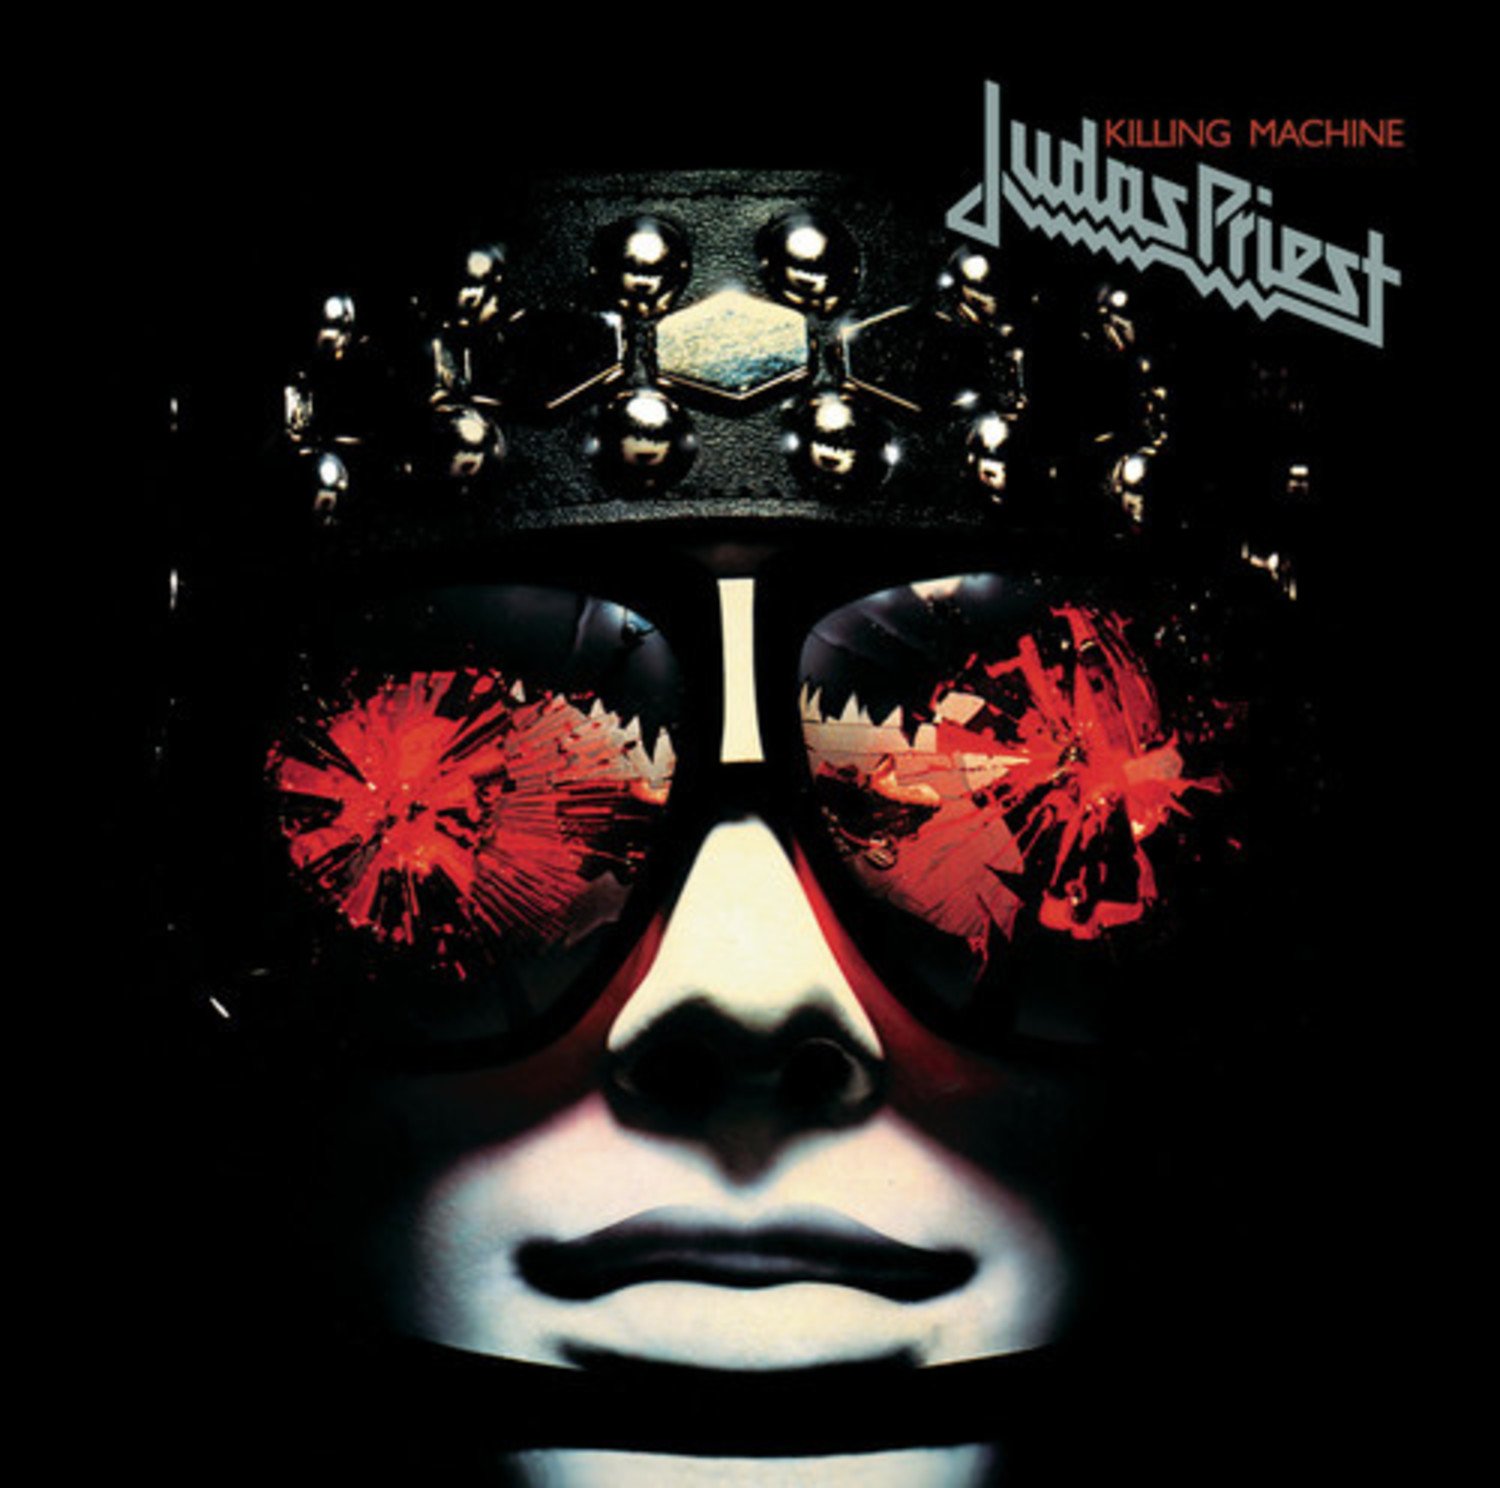 Judas Priest Killing Machine LP レコード